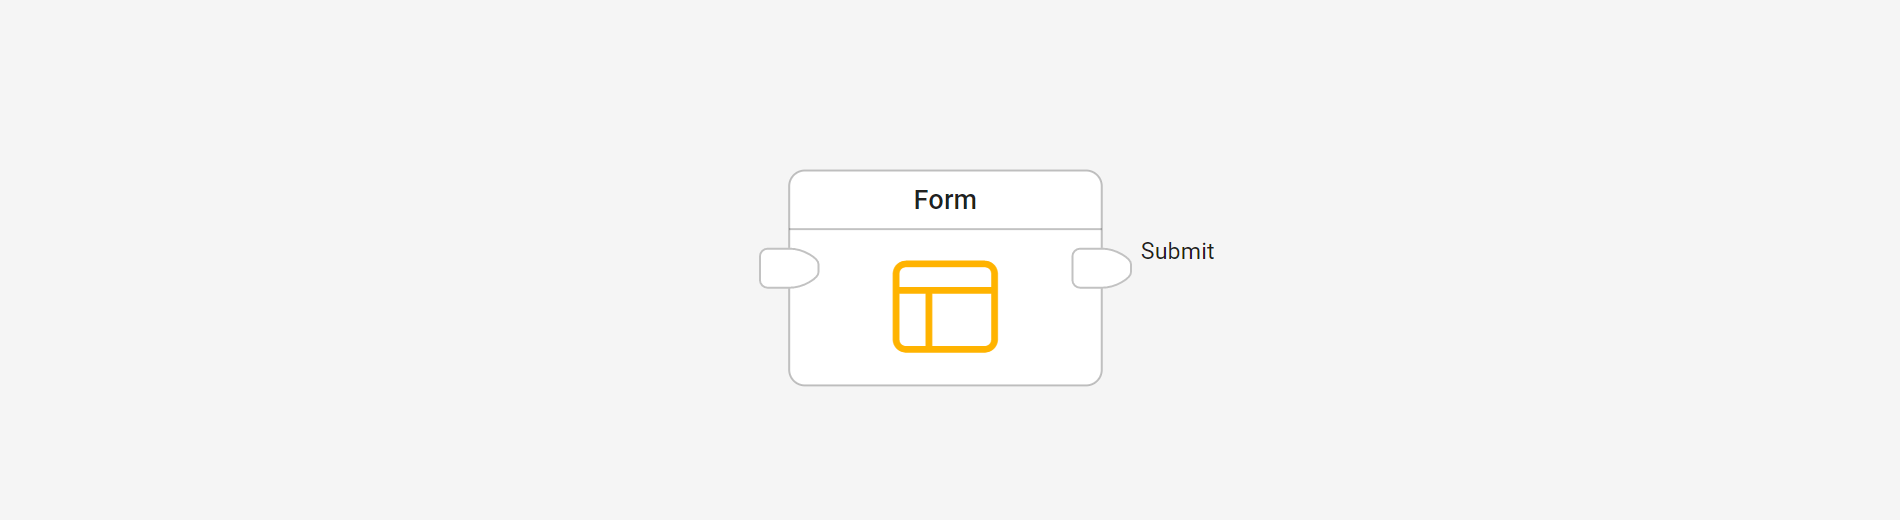 Create Form block in flow editor